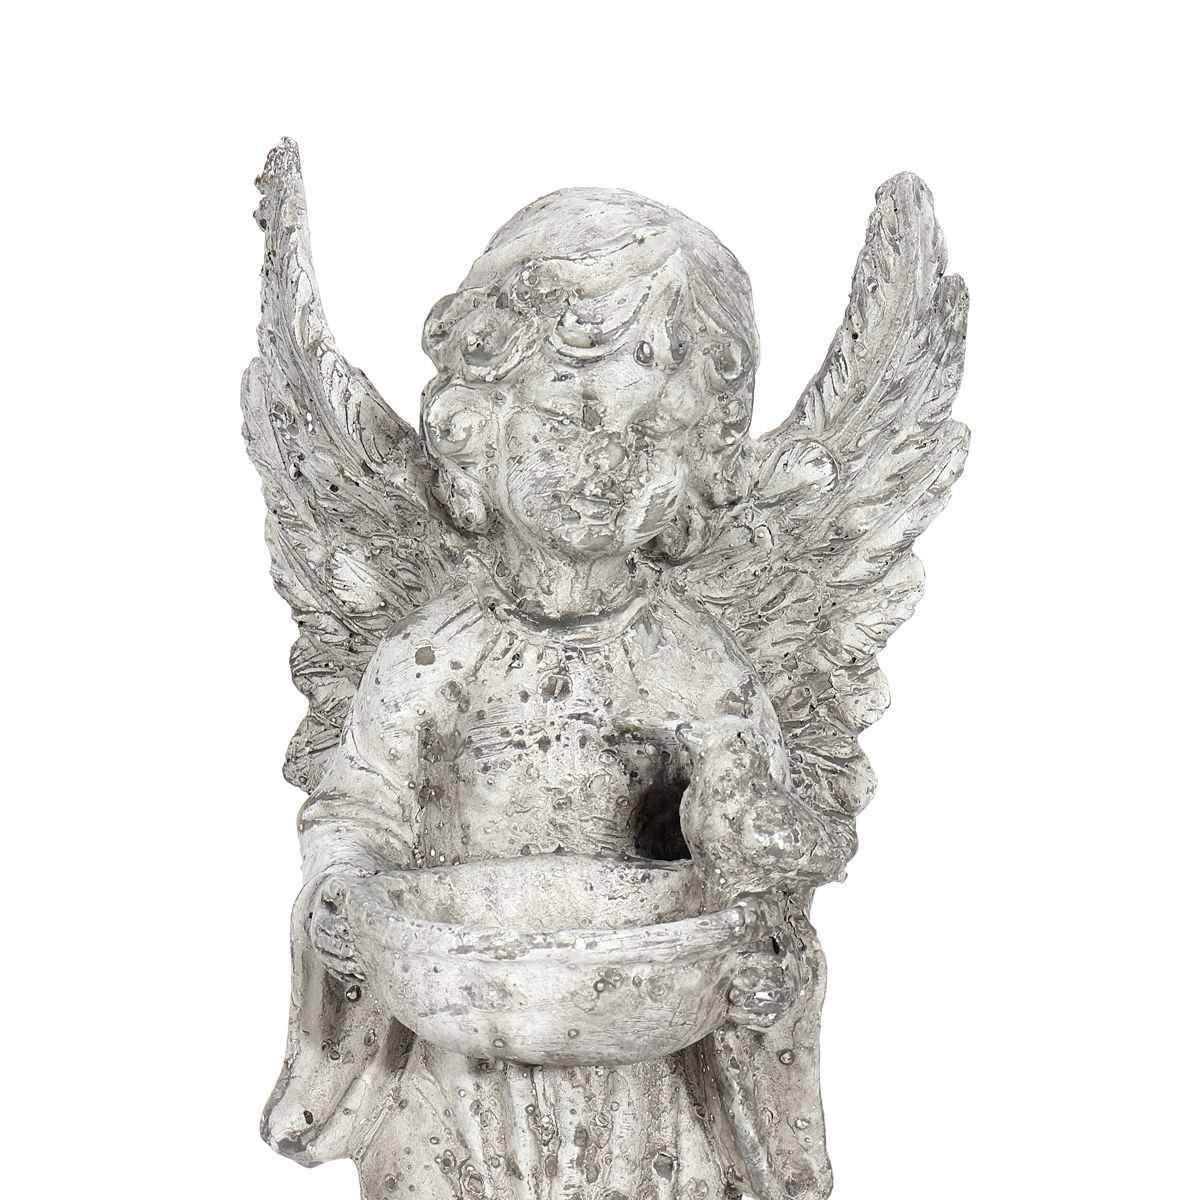 Solar-Fairy-Angel-Cherub-Garden-Ornament-Statue-Figurine-Art-Sculpture-Decorations-1507984